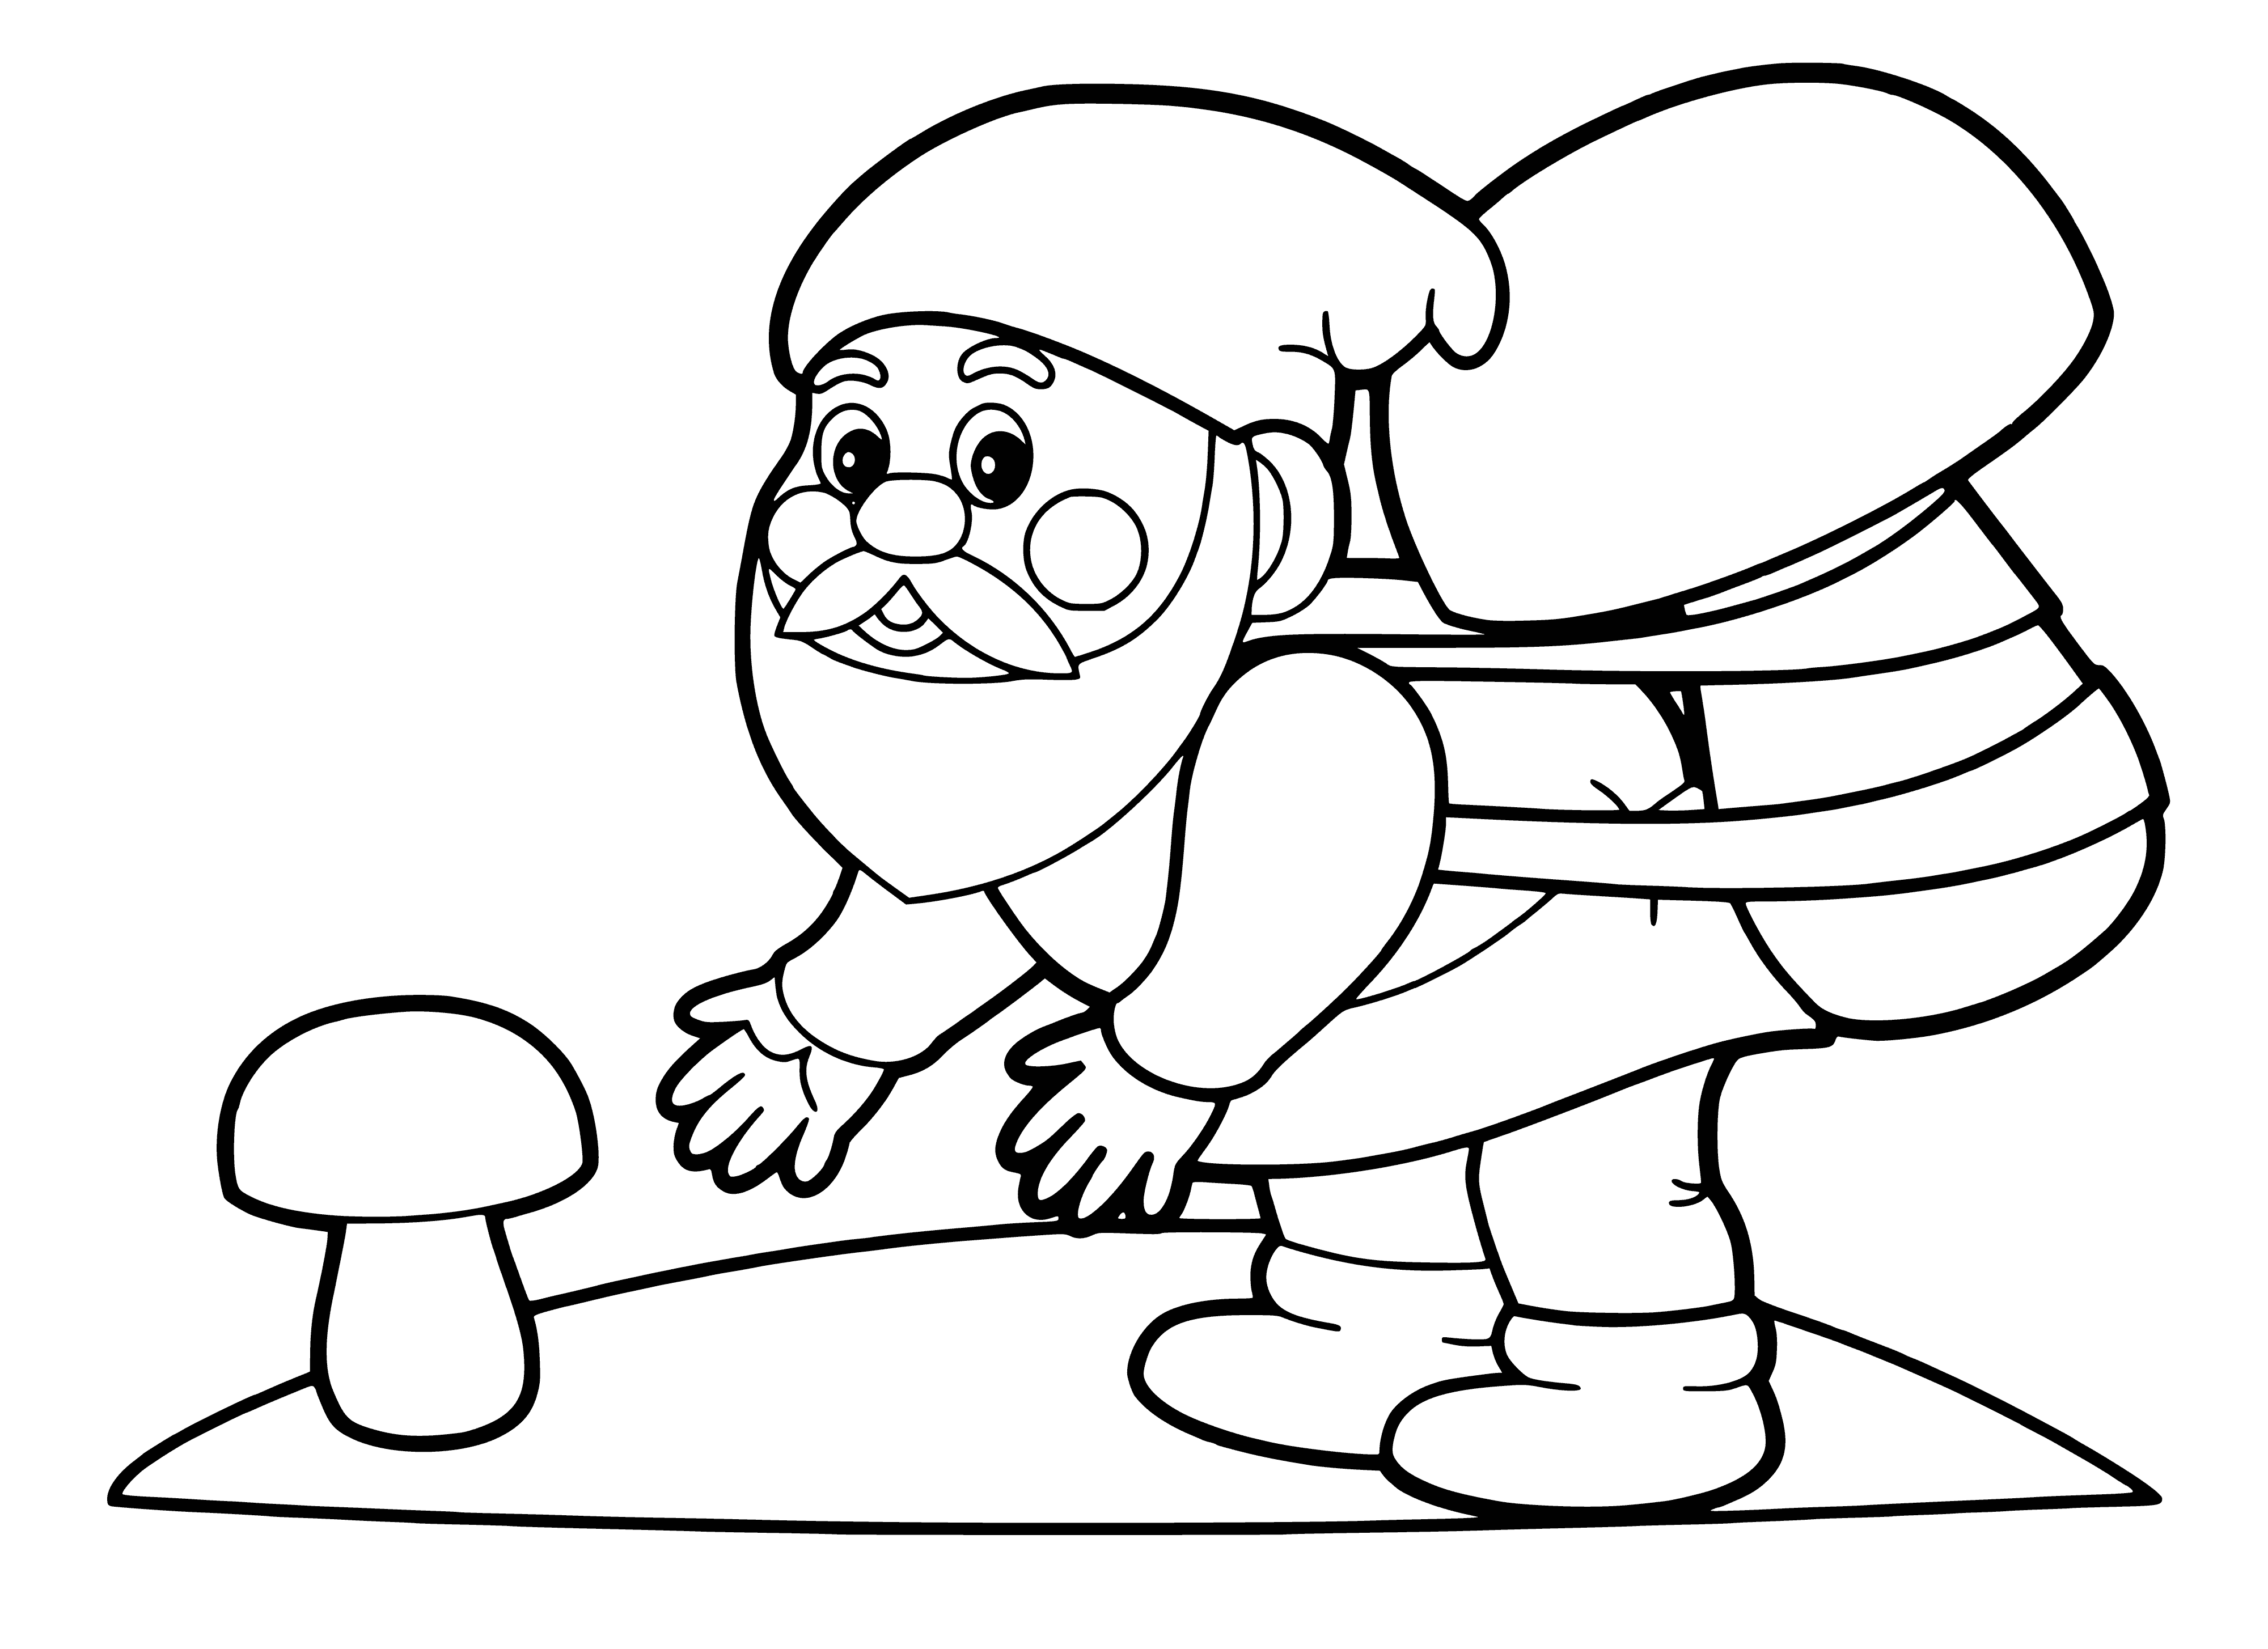 Dwarf coloring page